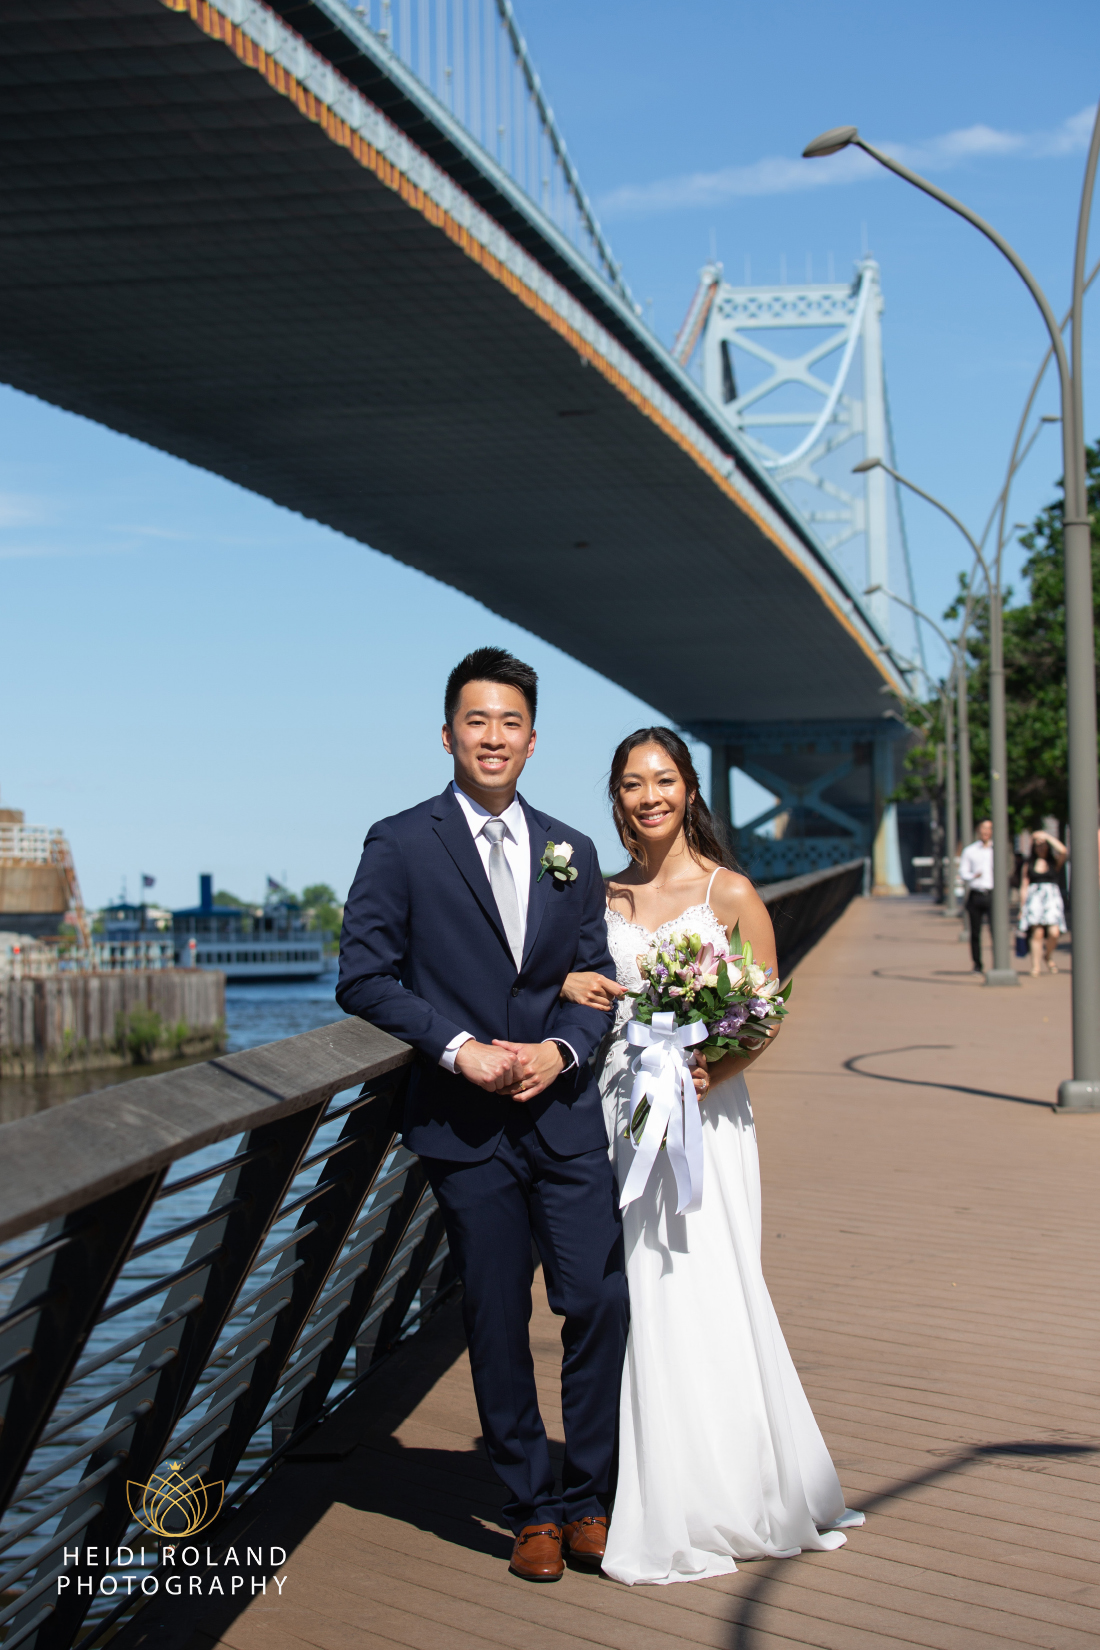 Bride and Groom on Race Street Pier in Philadelphia with Ben Franklin Bridge in the background